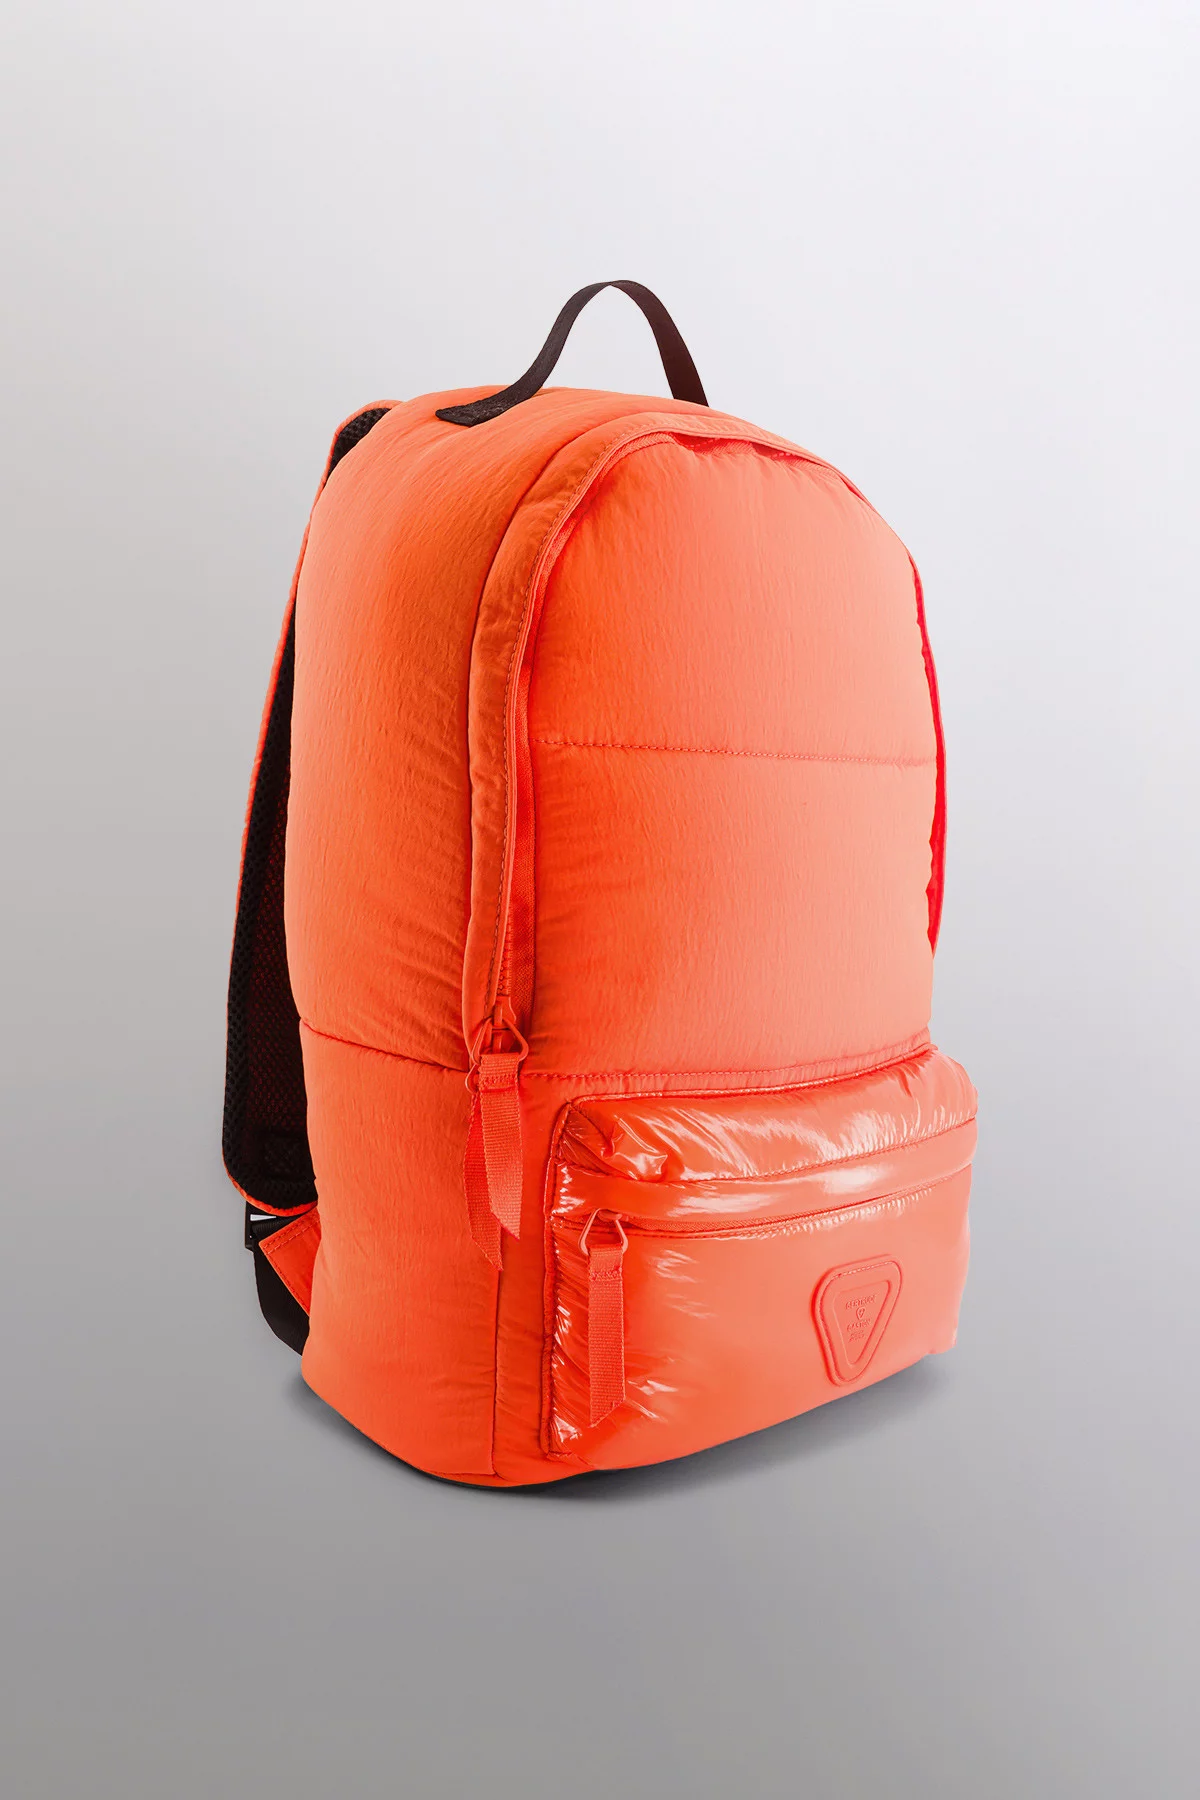 Levia School Backpack - AU-OBZM | Bud Harper